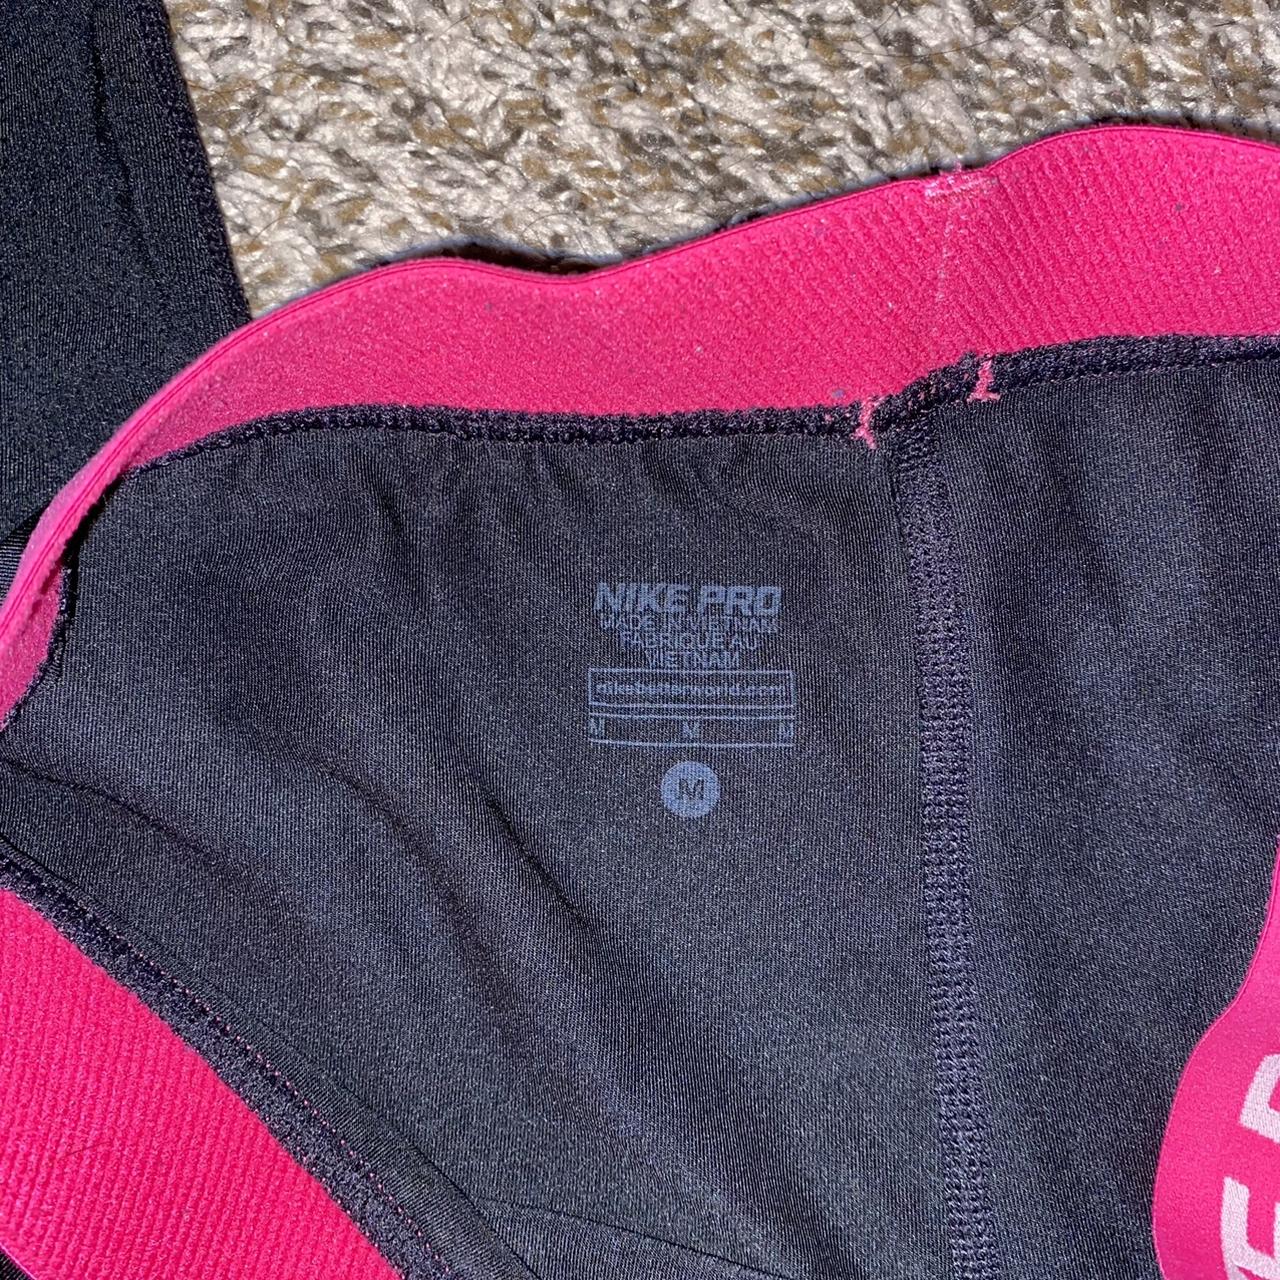 Nike Pro capri length leggings, size: medium, open to